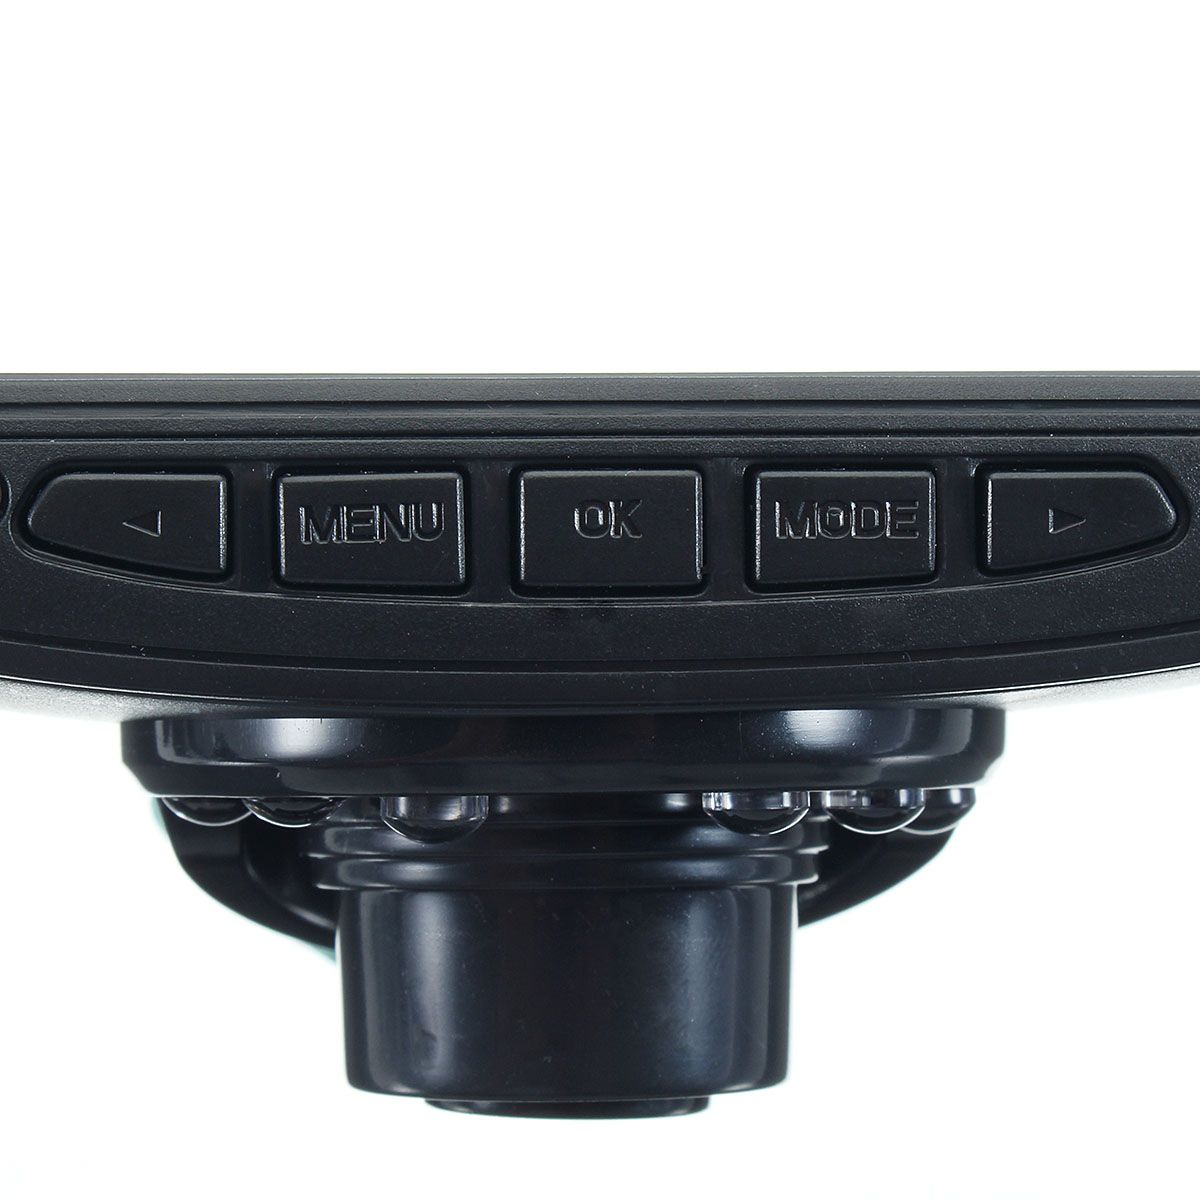 23-Inch-Car-DVR-Vehicle-Dash-Camera-Cam-Full-HD-1080P-Night-Vision-Recorder-1163715